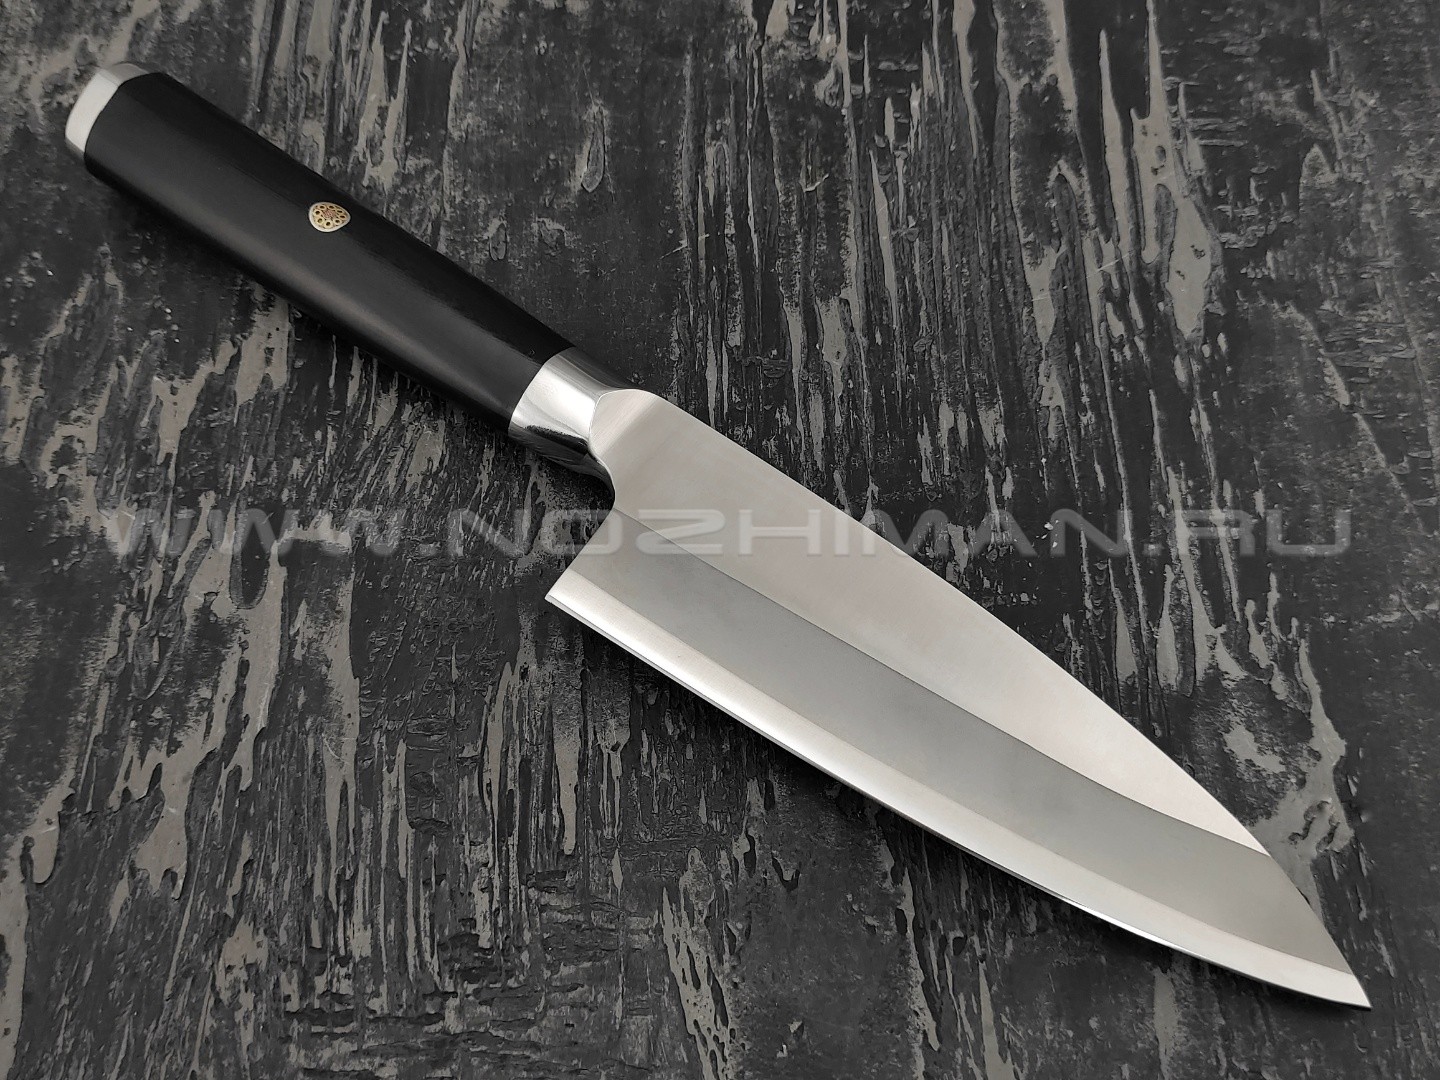 Нож TUOTOWN Deba TR-D6 сталь Aus-8, рукоять G10